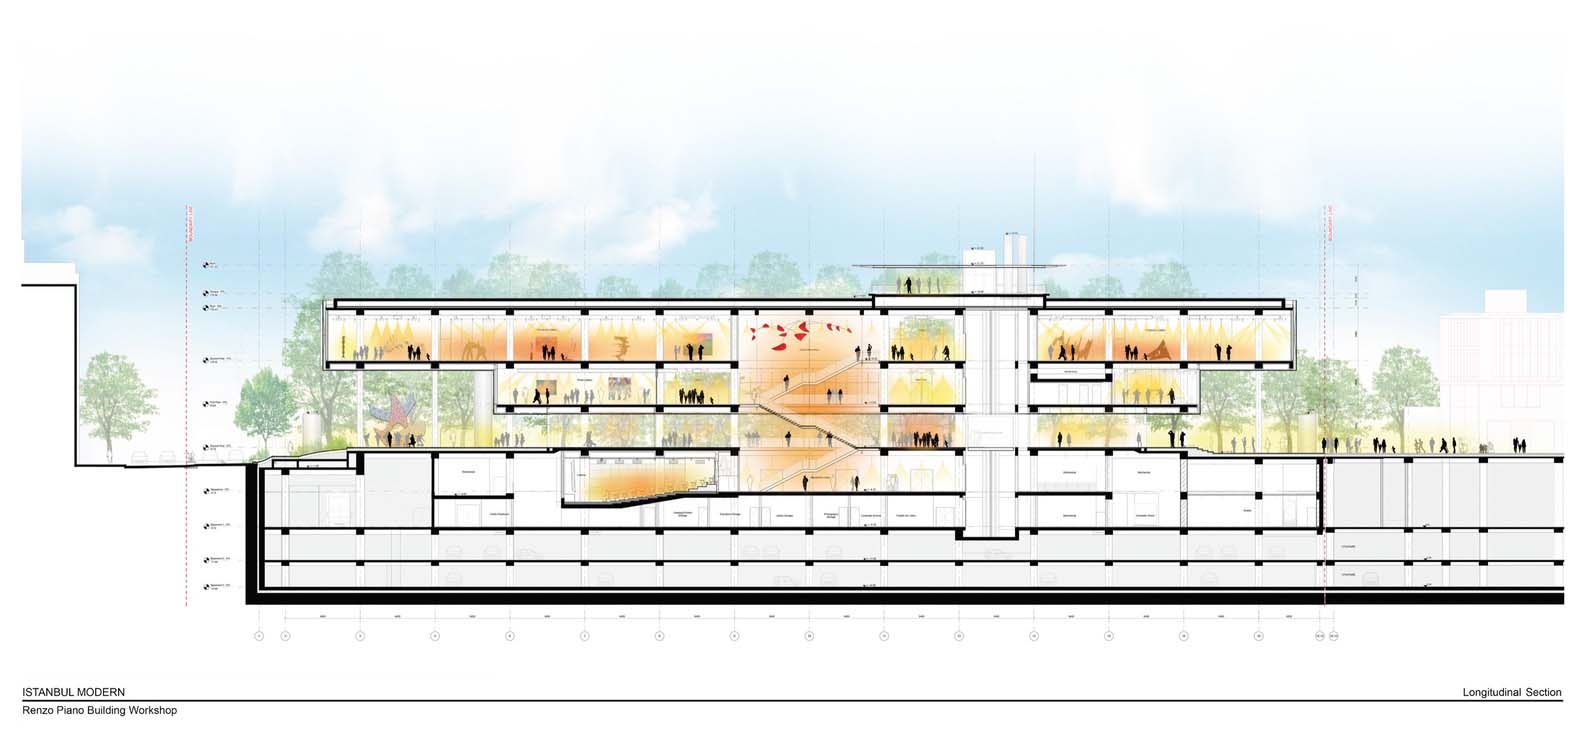 assonances: Renzo Piano / Georges Mathieu – Virginia Lorello